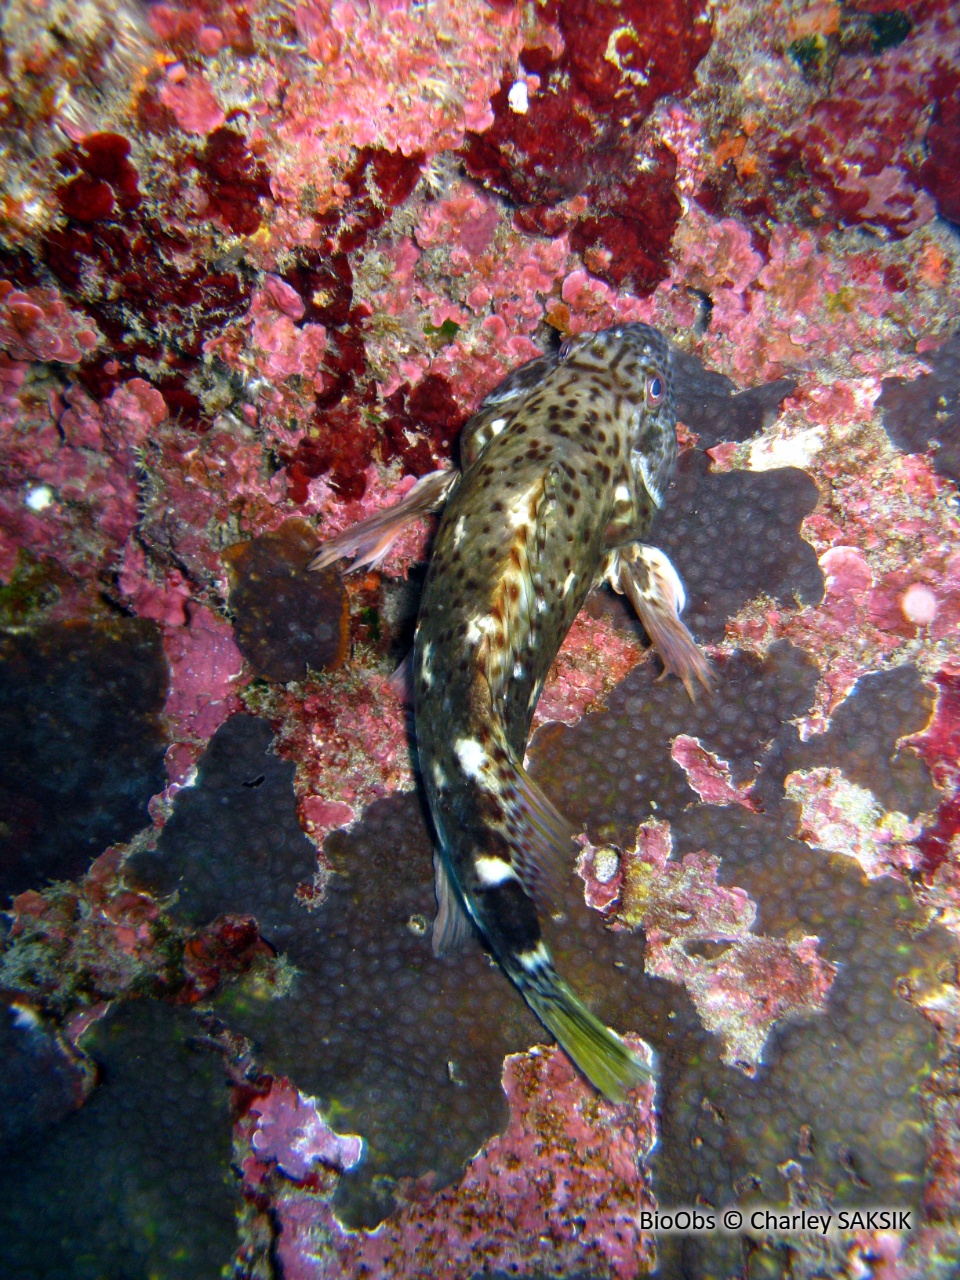 Epervier de corail - Cirrhitus pinnulatus - Charley SAKSIK - BioObs